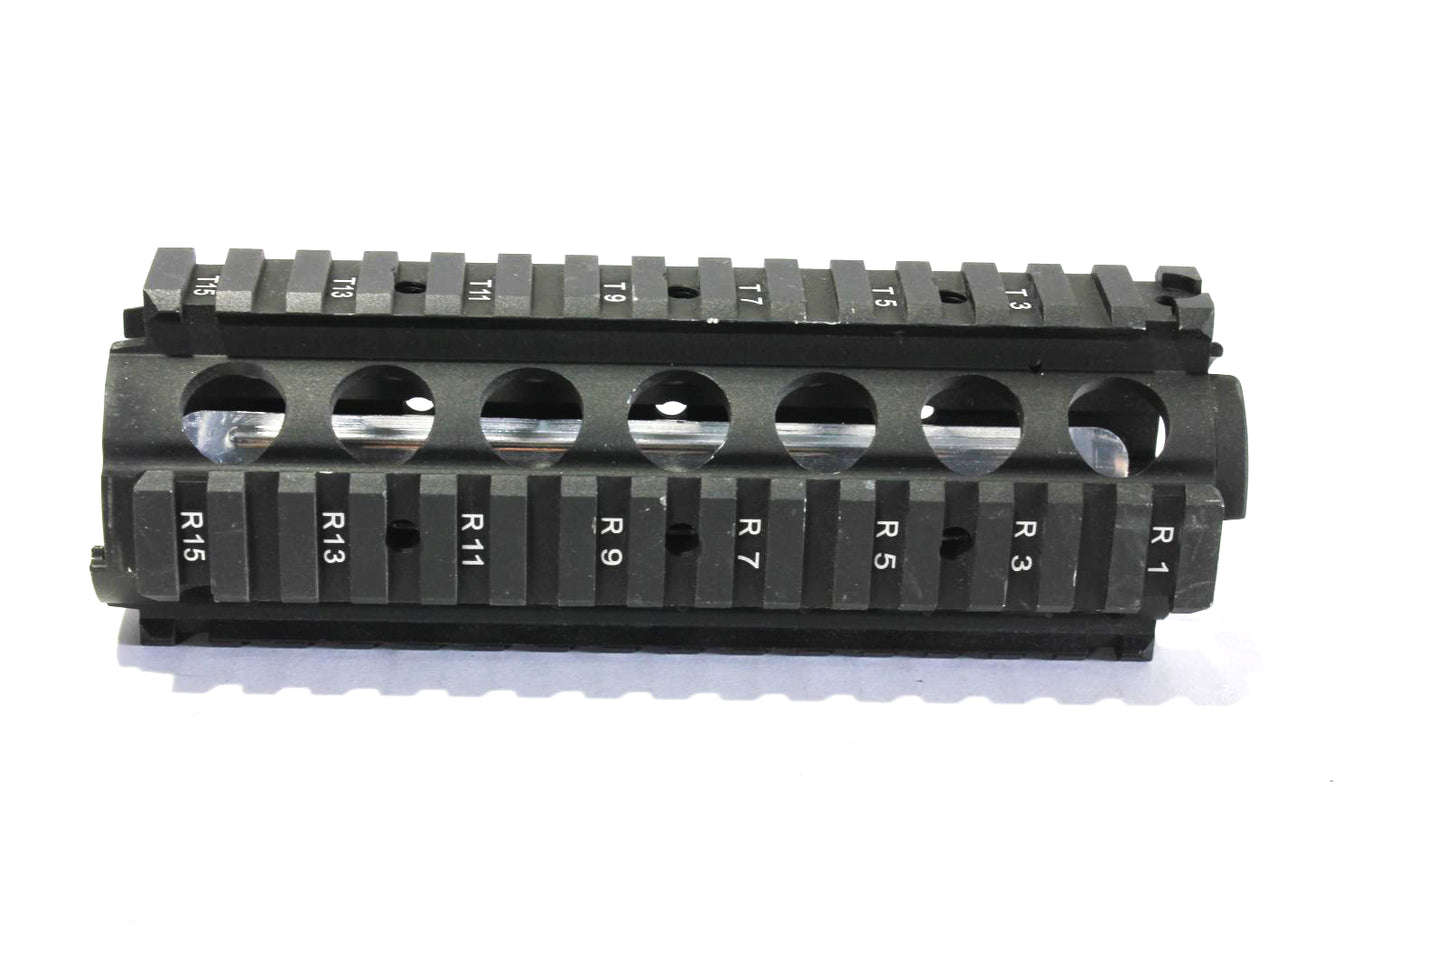 Full Metal M4 Carbine Length Quad RIS Handguard Conversion Kit